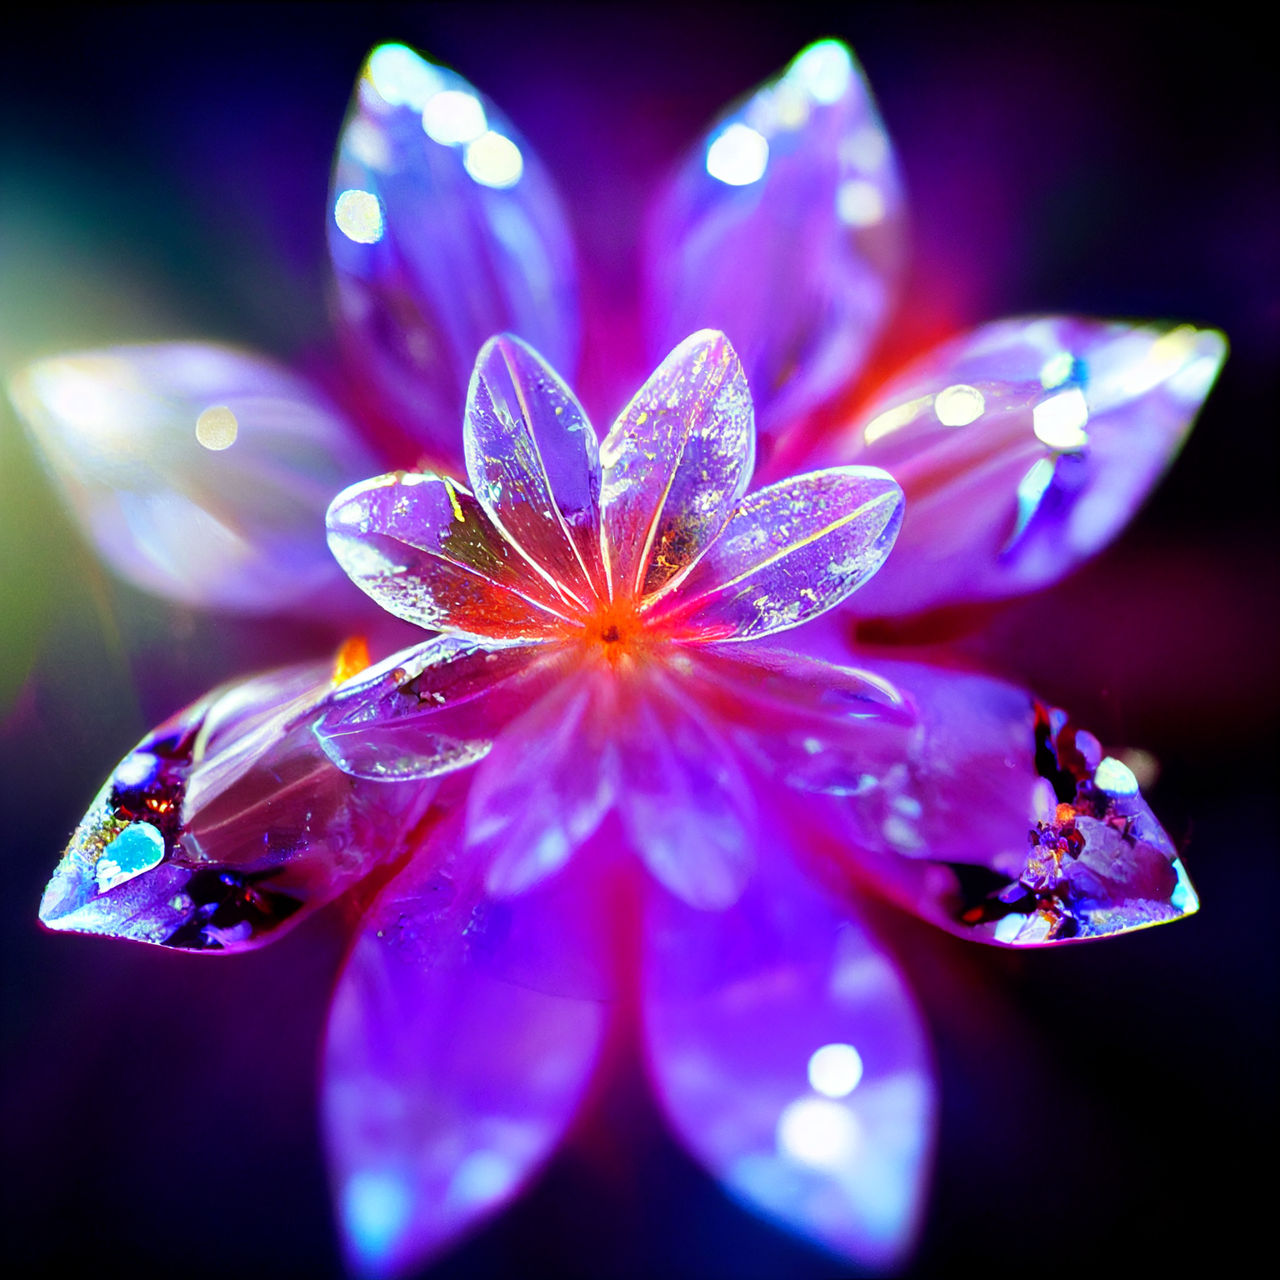 Crystal Flowers 1.2 by sugoidigi on DeviantArt